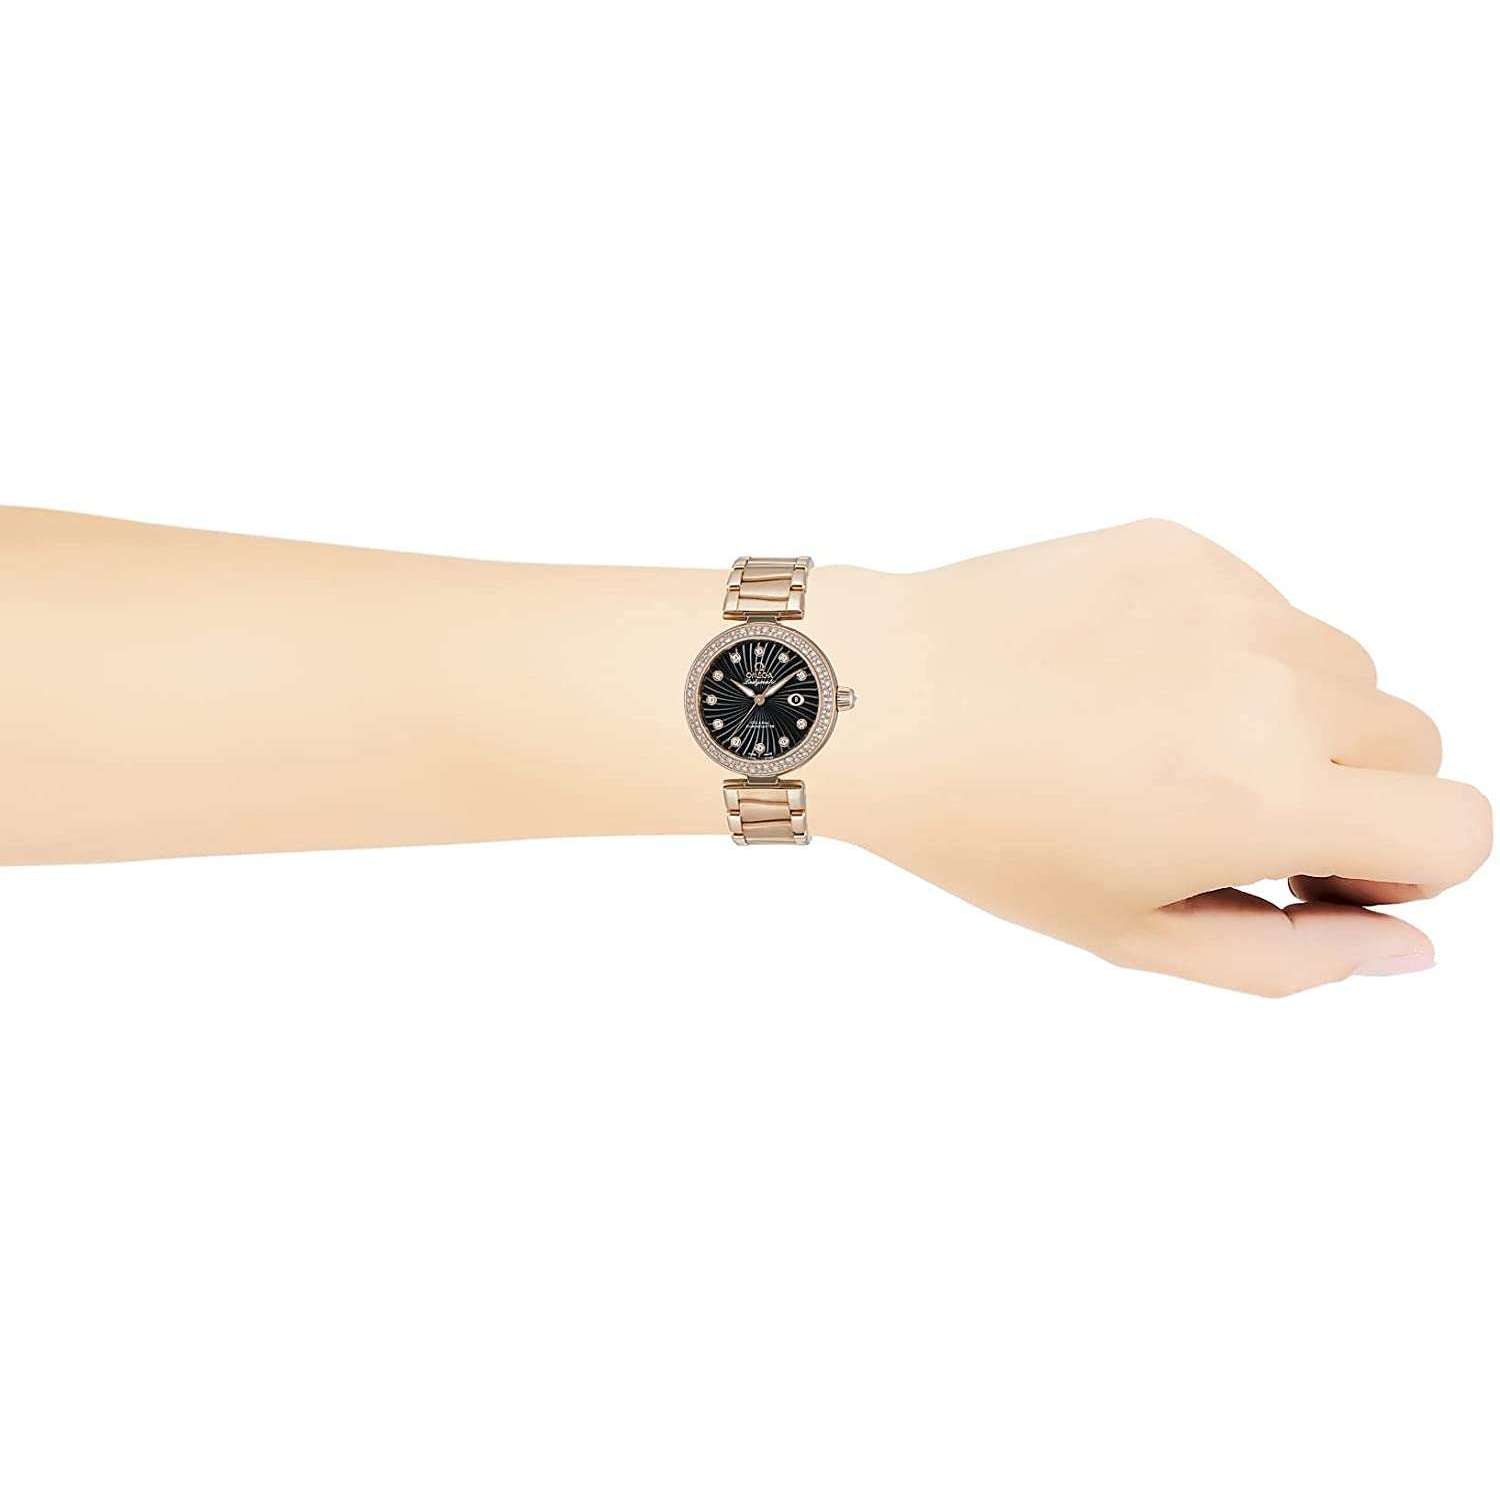 ROOK JAPAN:OMEGA DE VILLE LADYMATIC CO-AXIAL CHRONOMETER 34 MM WOMEN WATCH 425.65.34.20.51.001,Luxury Watch,Omega